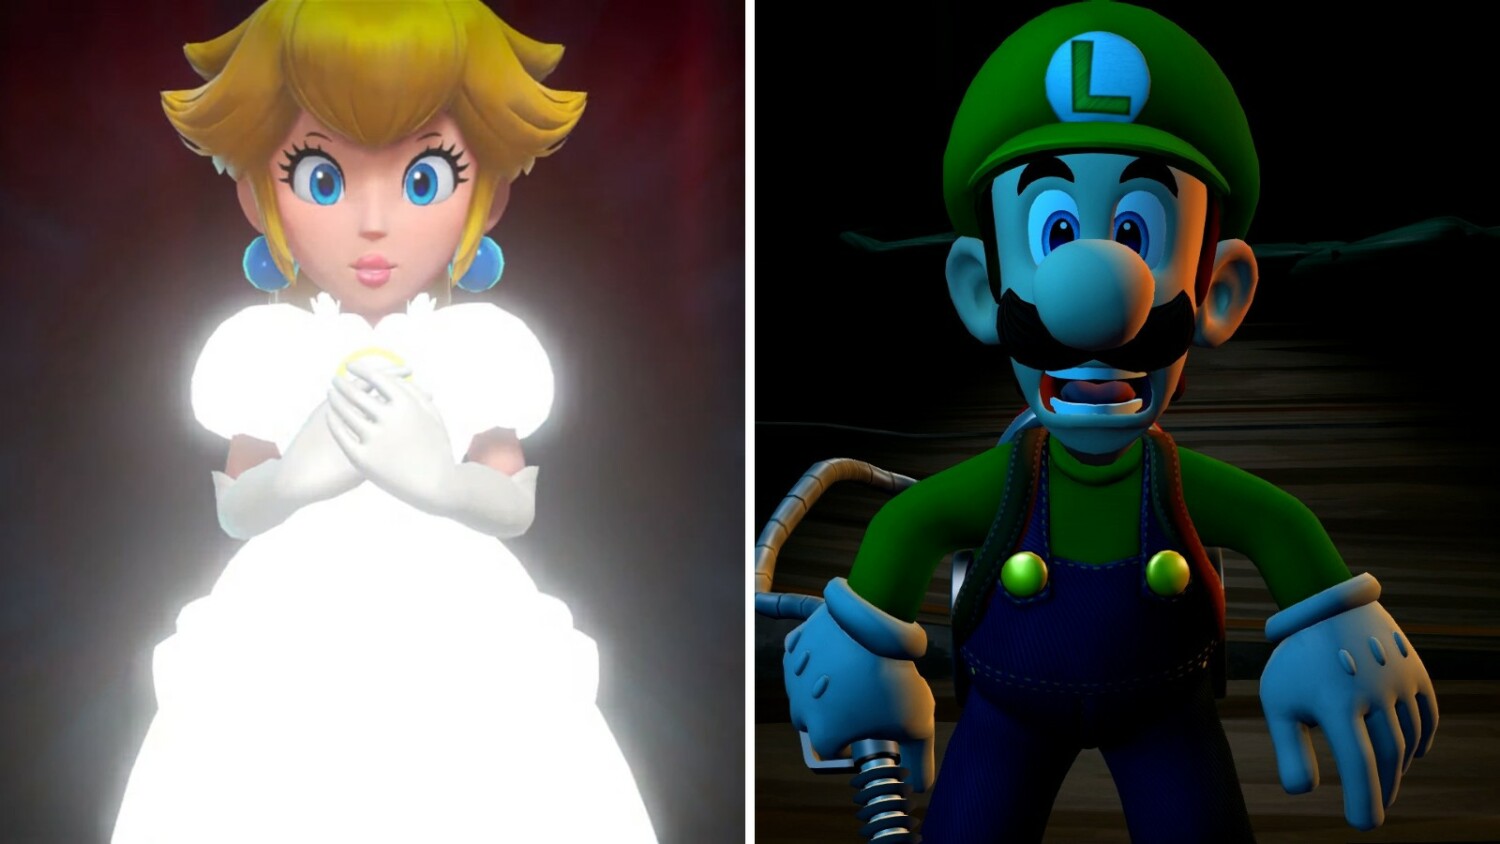 Untitled Princess Peach Game And Luigi's Mansion Dark Moon